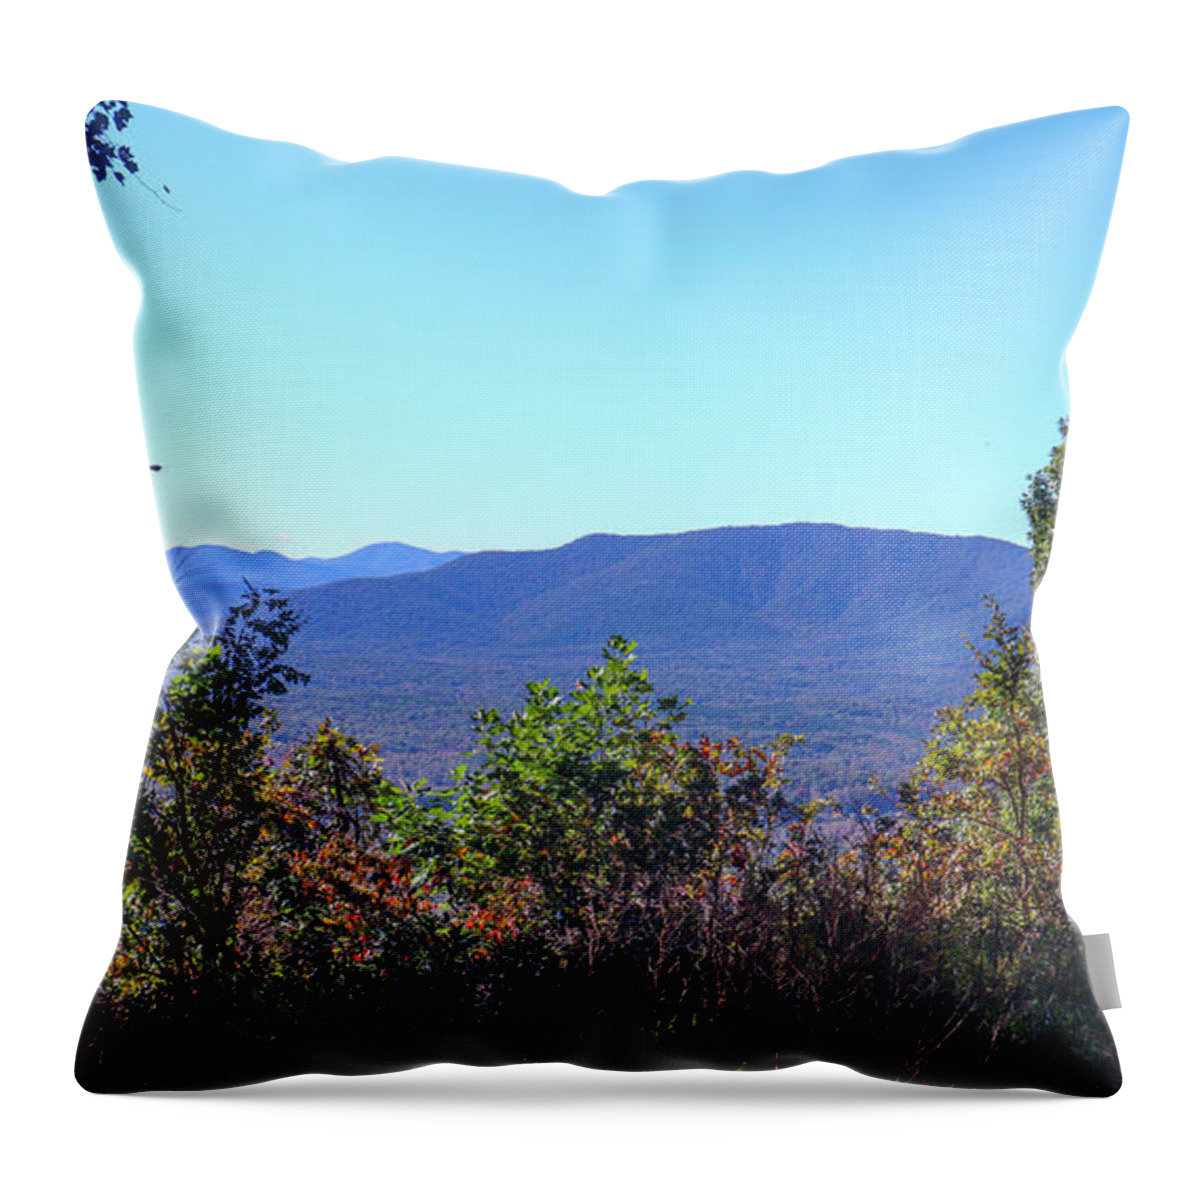 Mountains Throw Pillow featuring the photograph Mountain To Mountain by Ed Williams